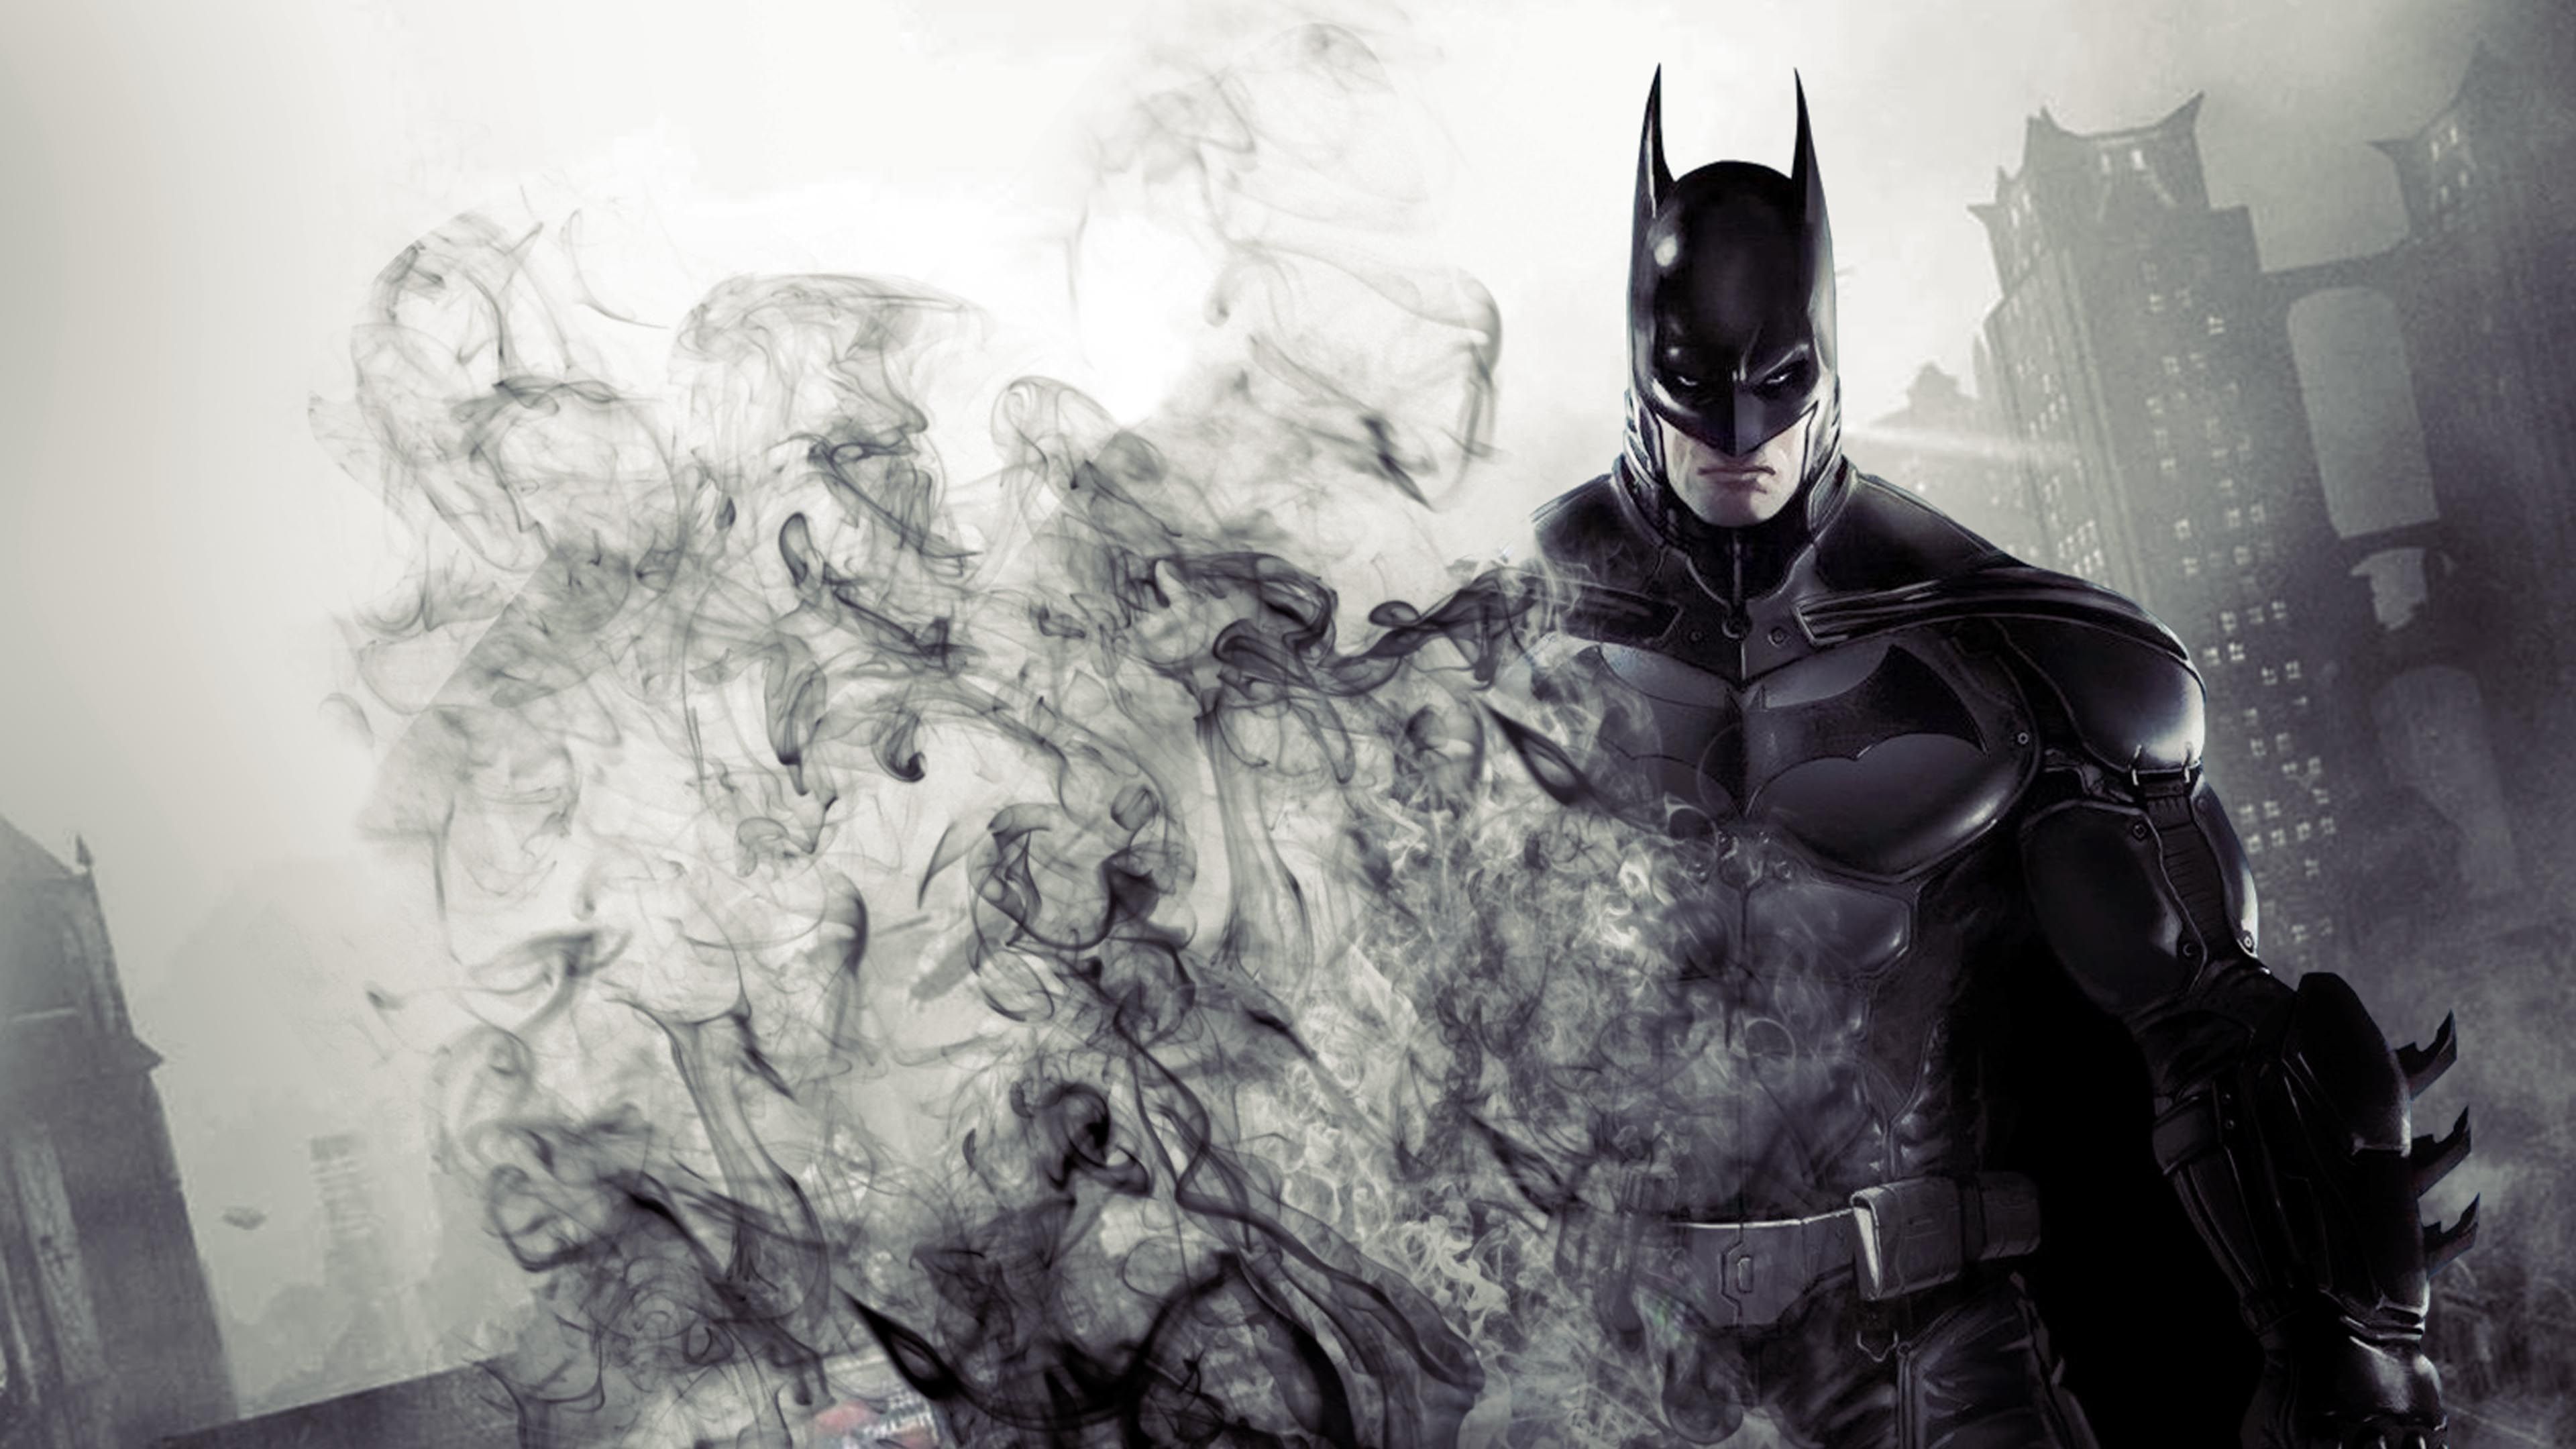 Wallpaper para Celular do Batman  Batman wallpaper, Batman, Arte batman